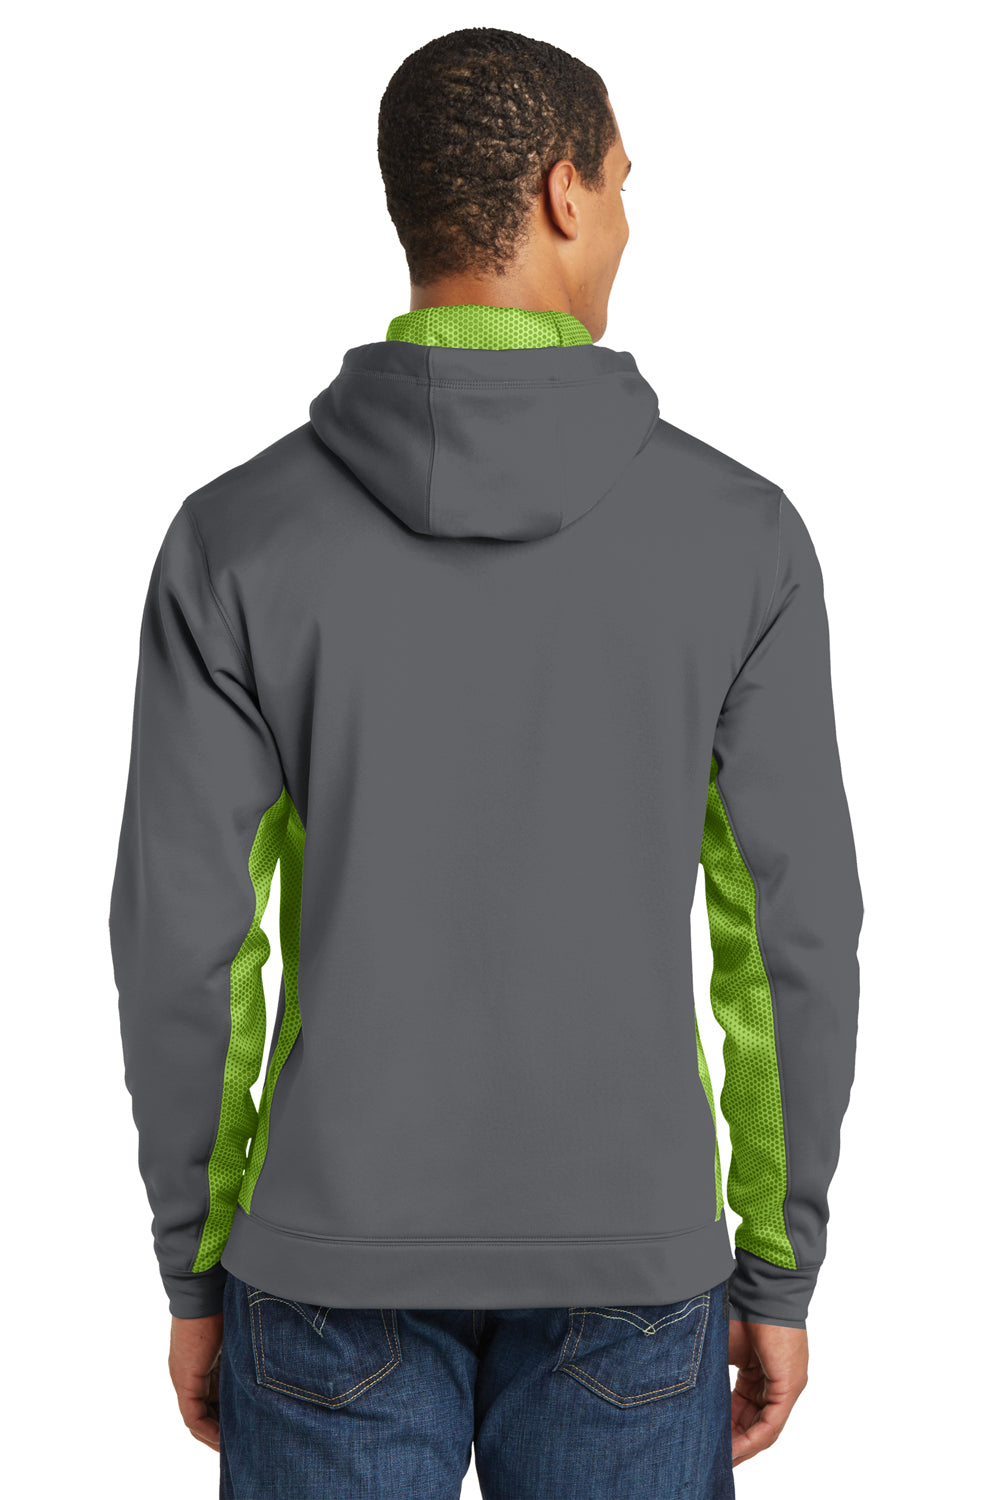 Sport-Tek ST239 Mens Sport-Wick CamoHex Moisture Wicking Fleece Hooded Sweatshirt Hoodie Dark Grey/Lime Green Back